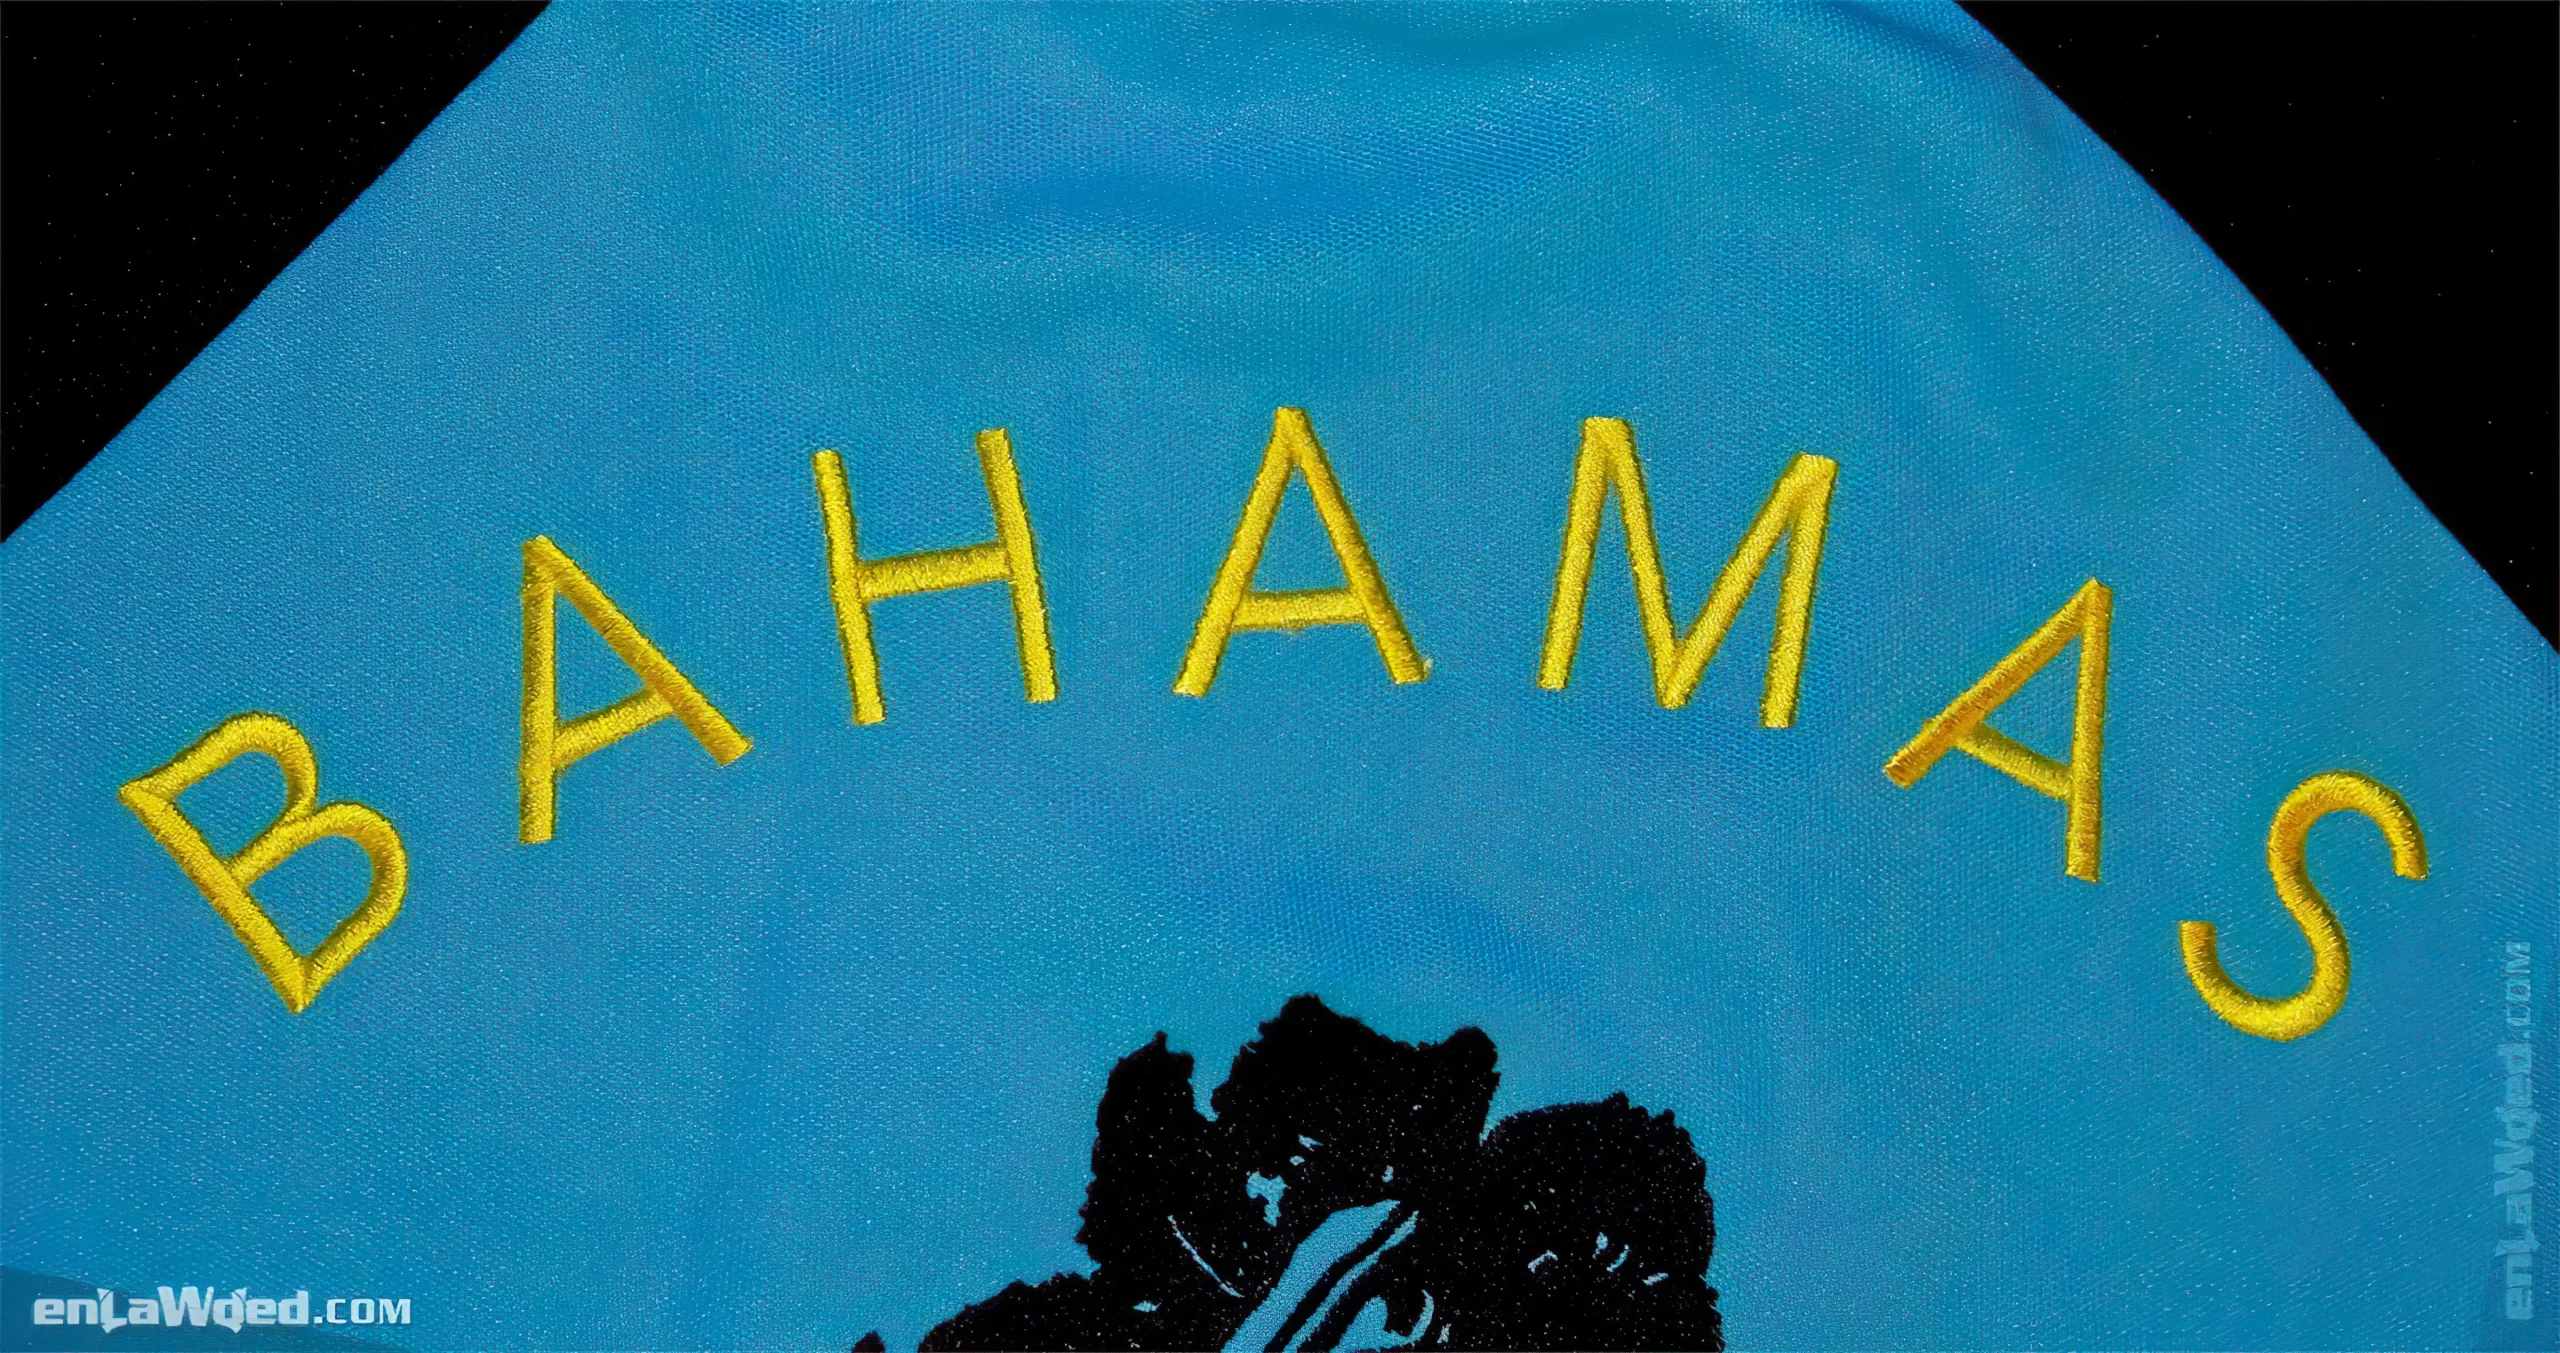 Men’s 2007 Bahamas Track Top by Adidas Originals: Charming (EnLawded.com file #lmchk90199ip2y121948kg9st)